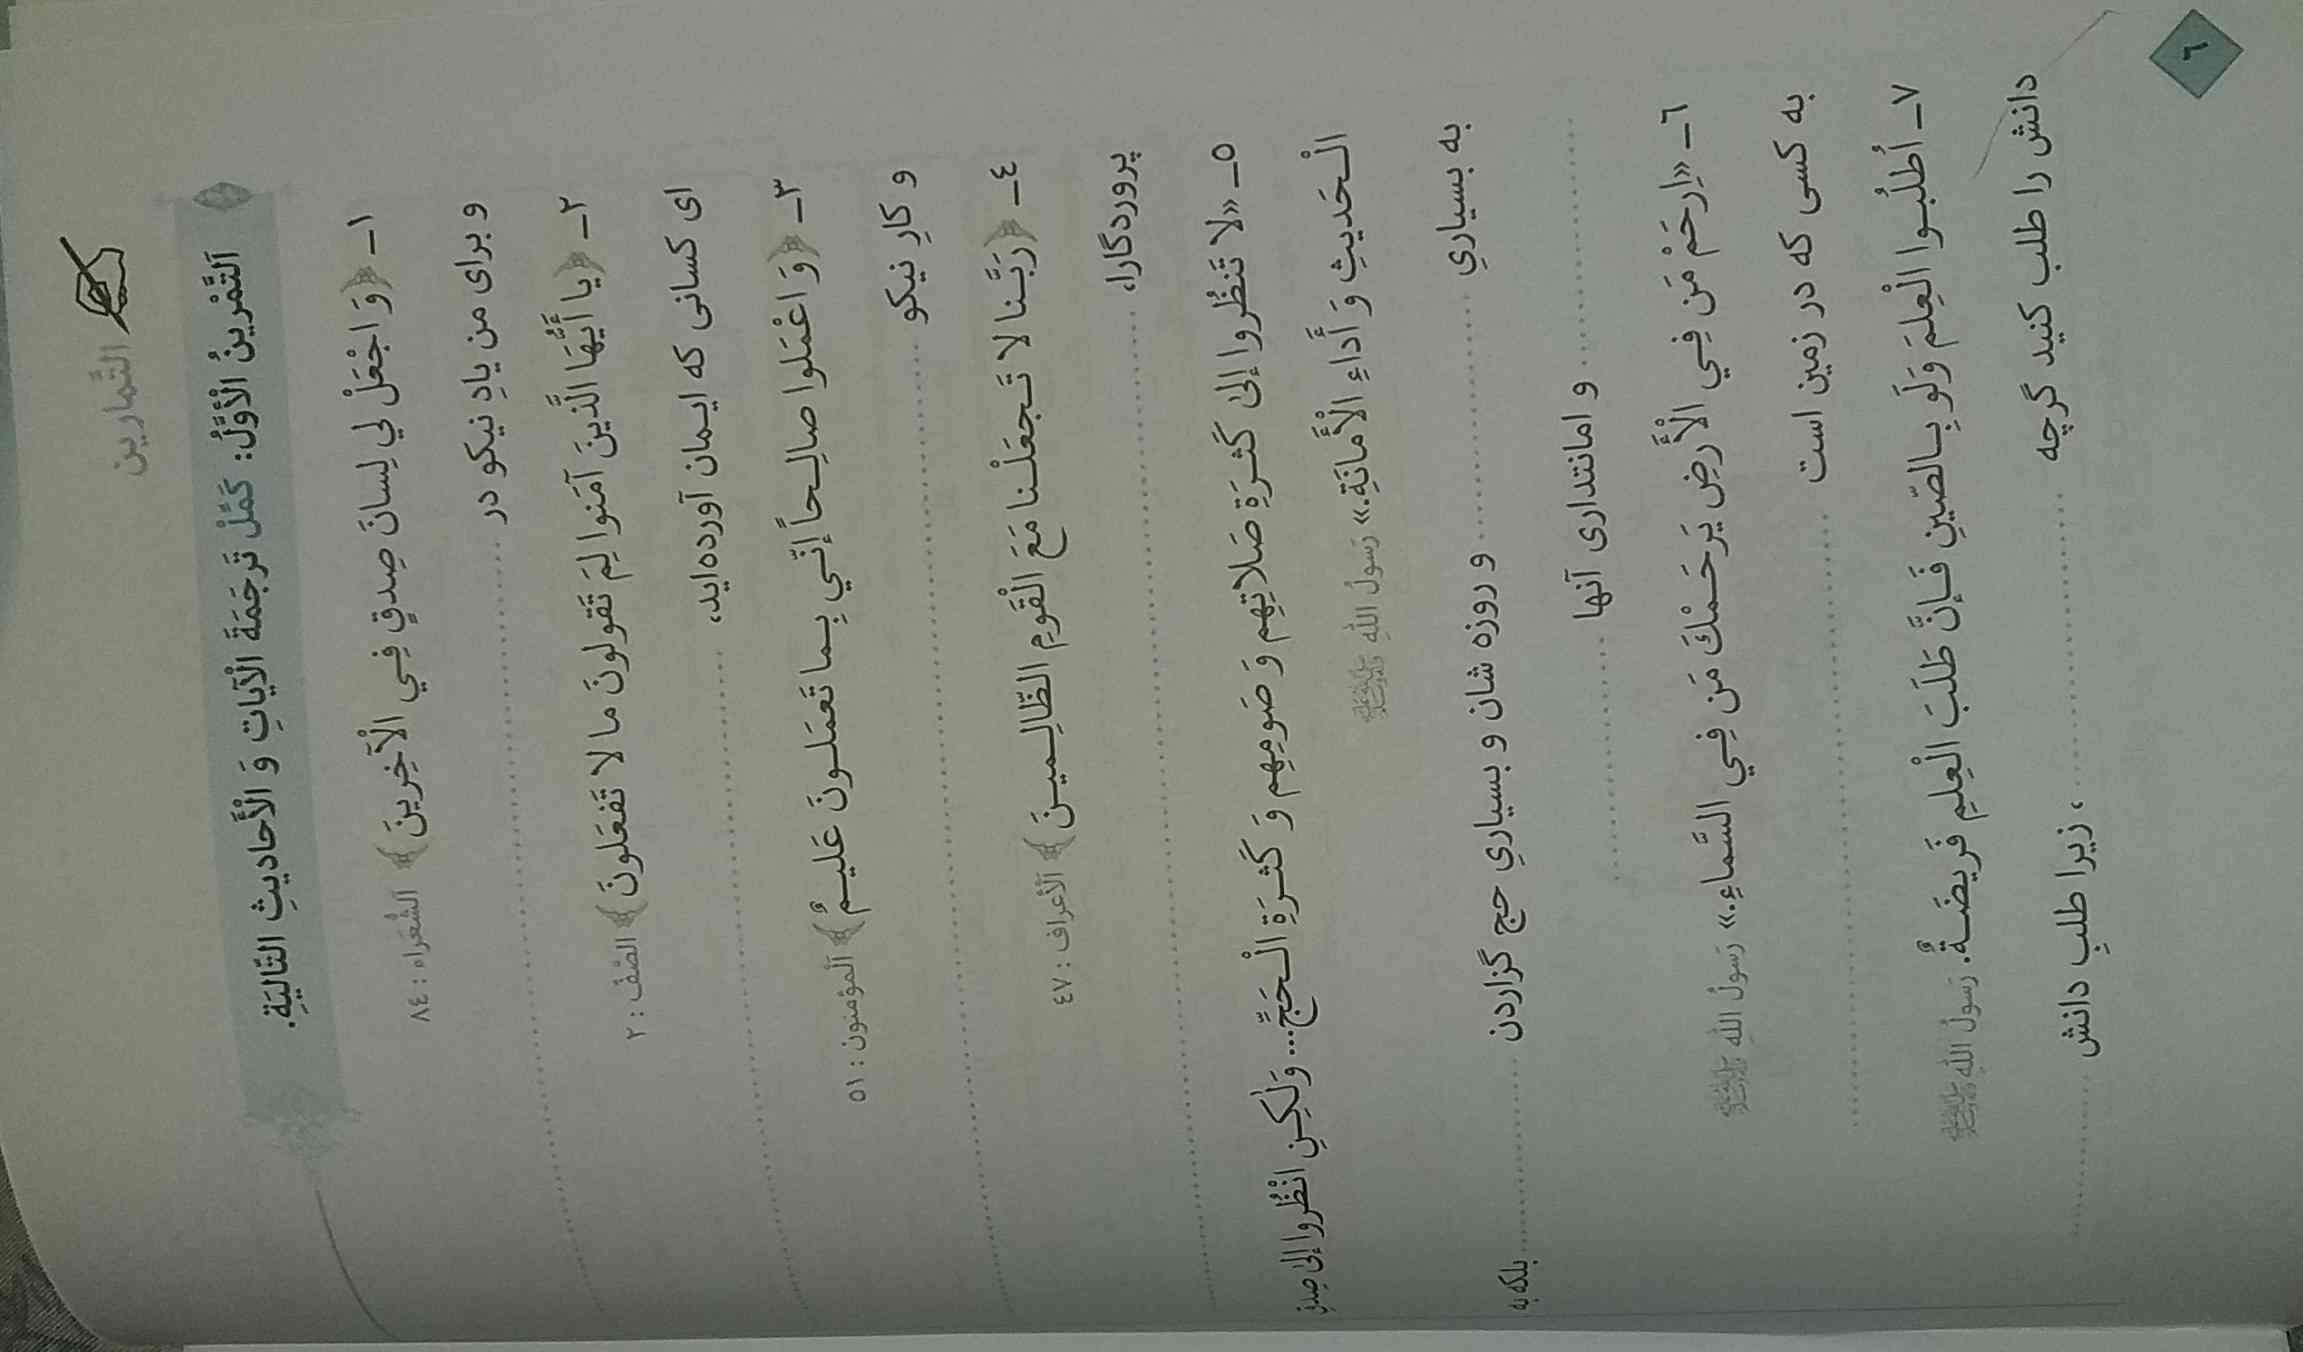 جواب صفحه ۶ عربی لطفا؟